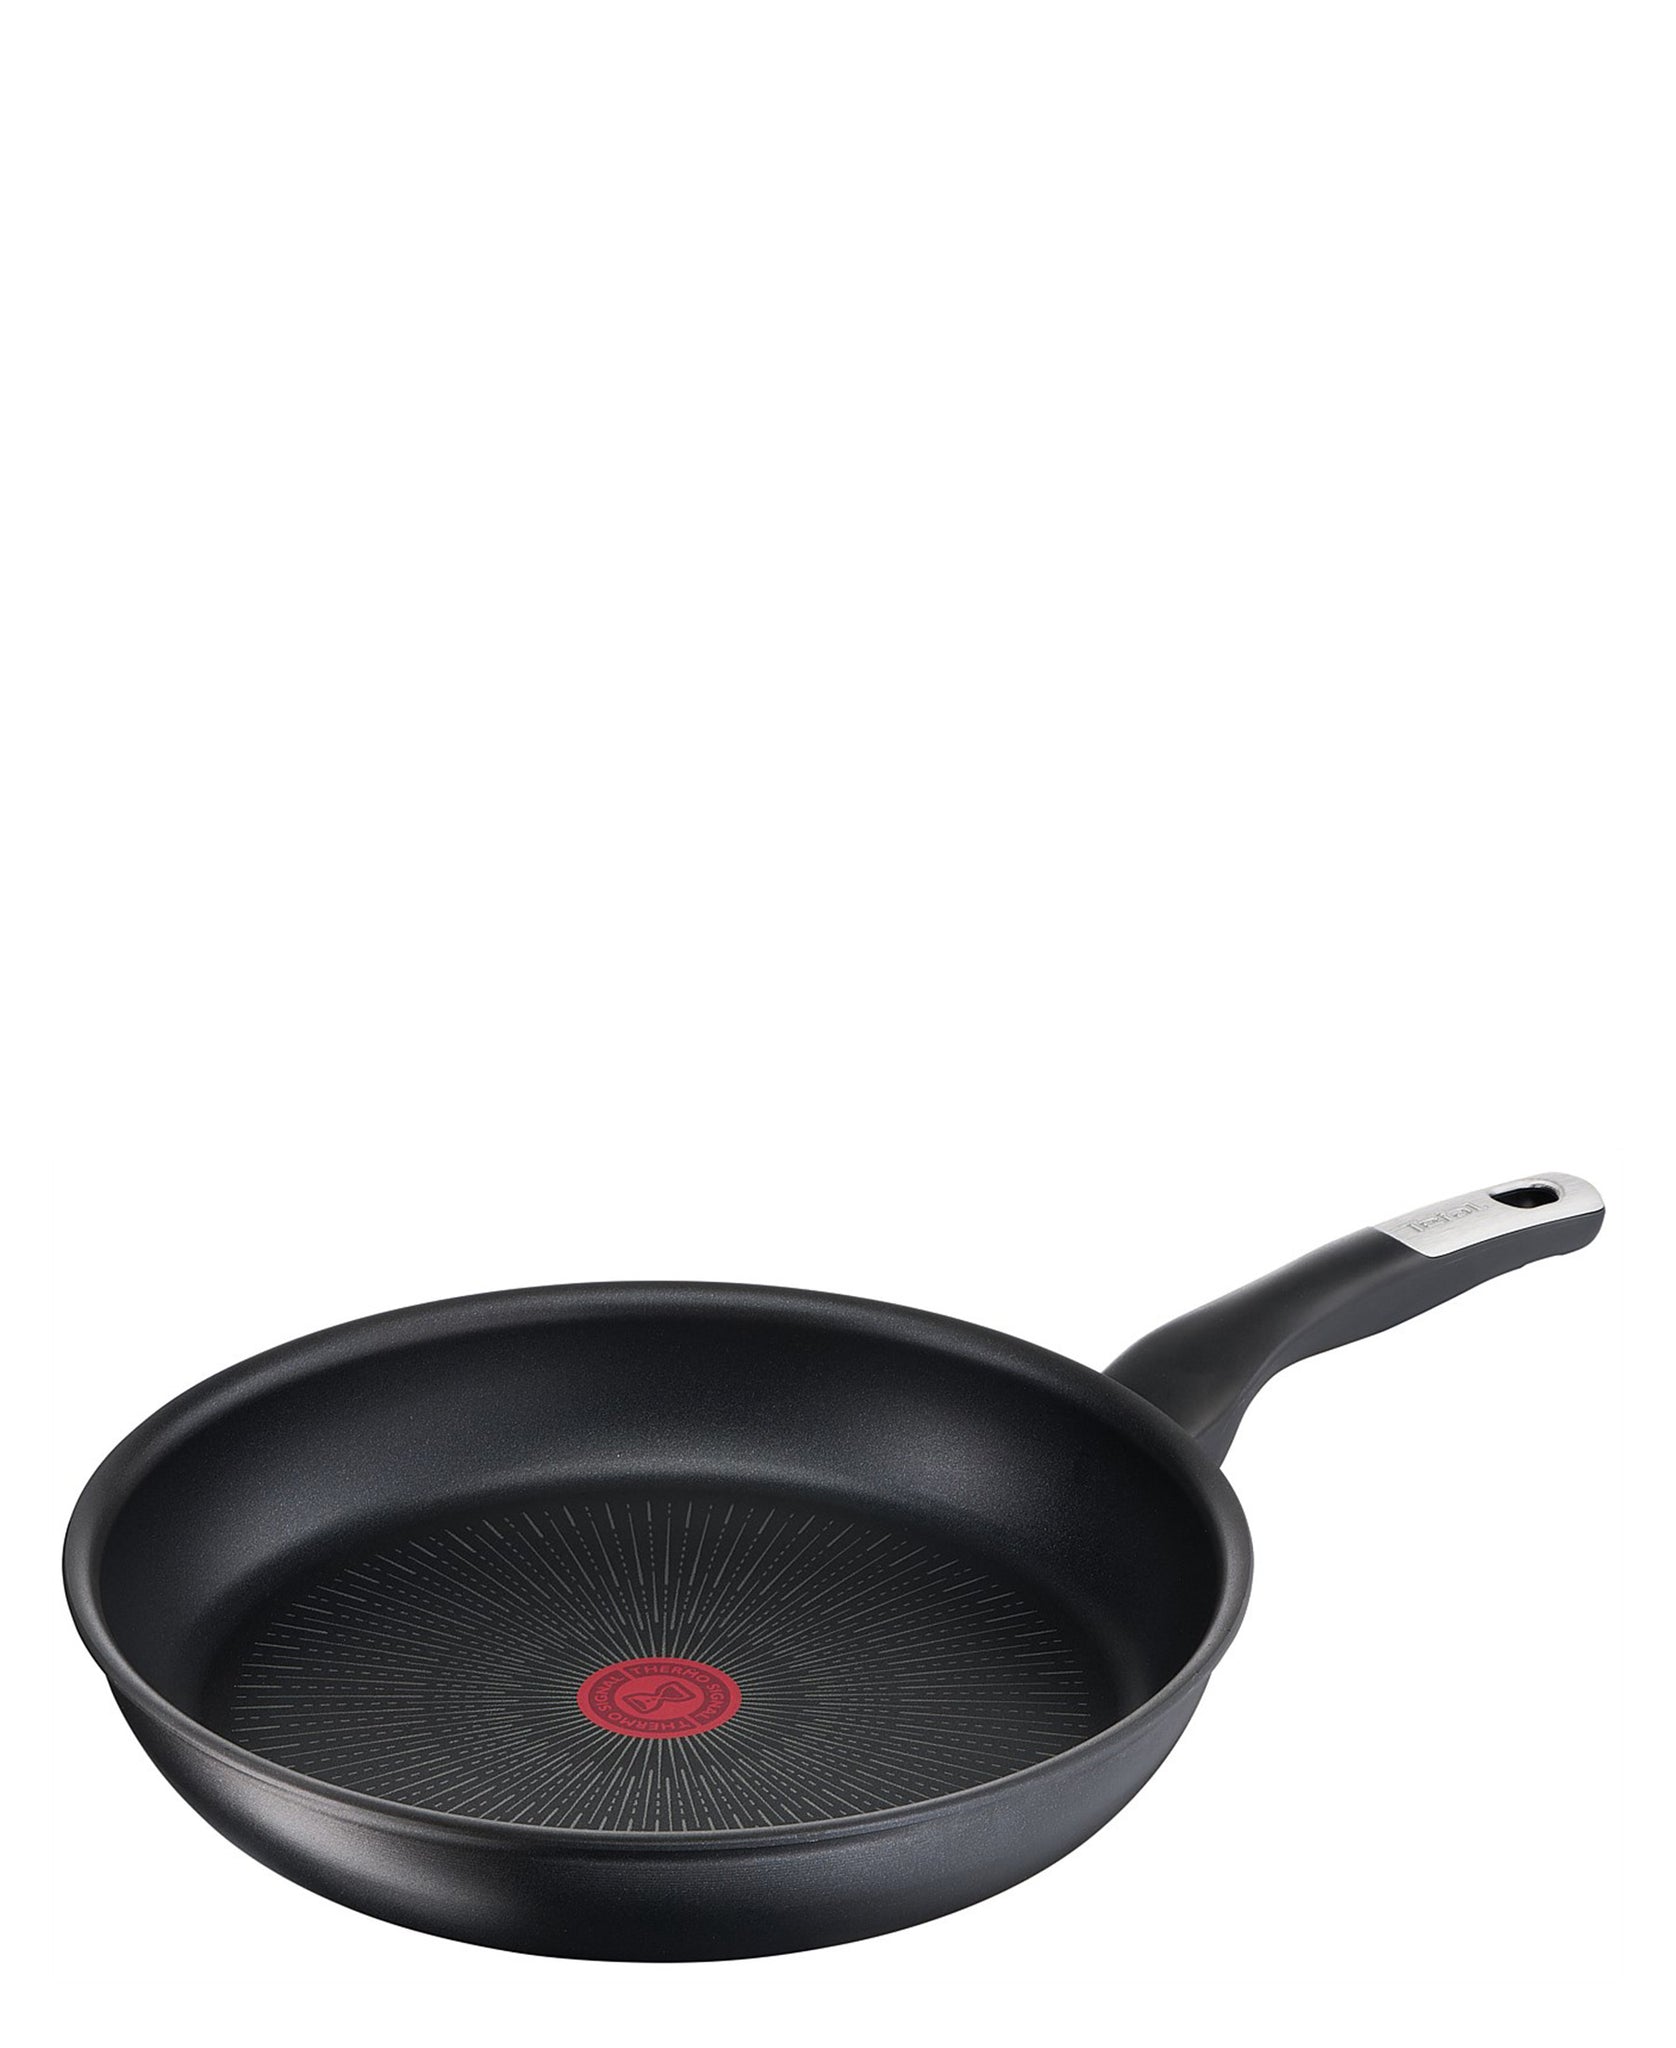 Tefal Unlimited Frying Pan 32cm - Black